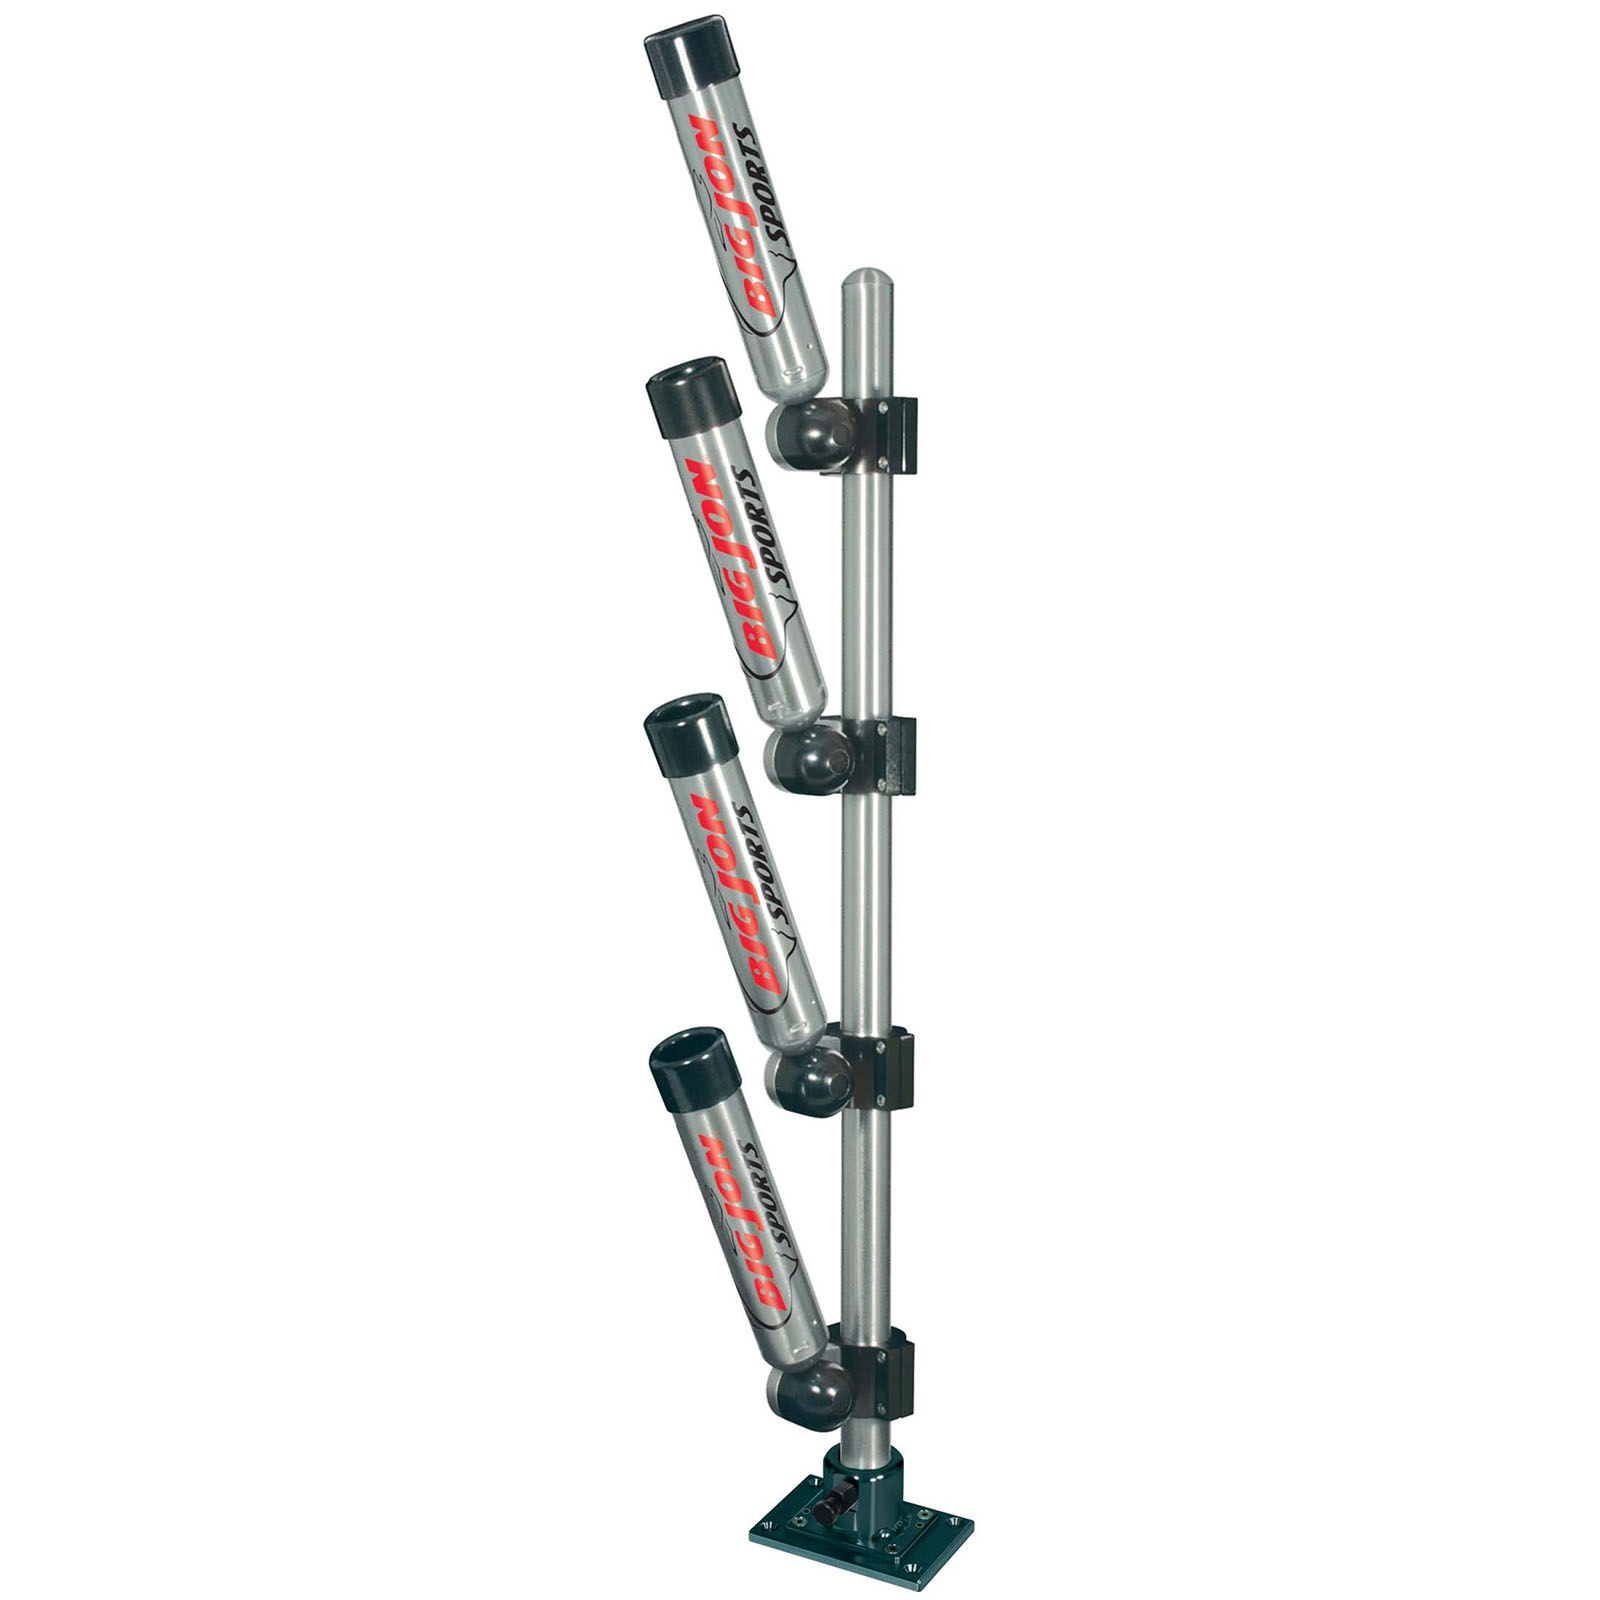 Triple Multi-Axis Pedestal Mount Rod Holder